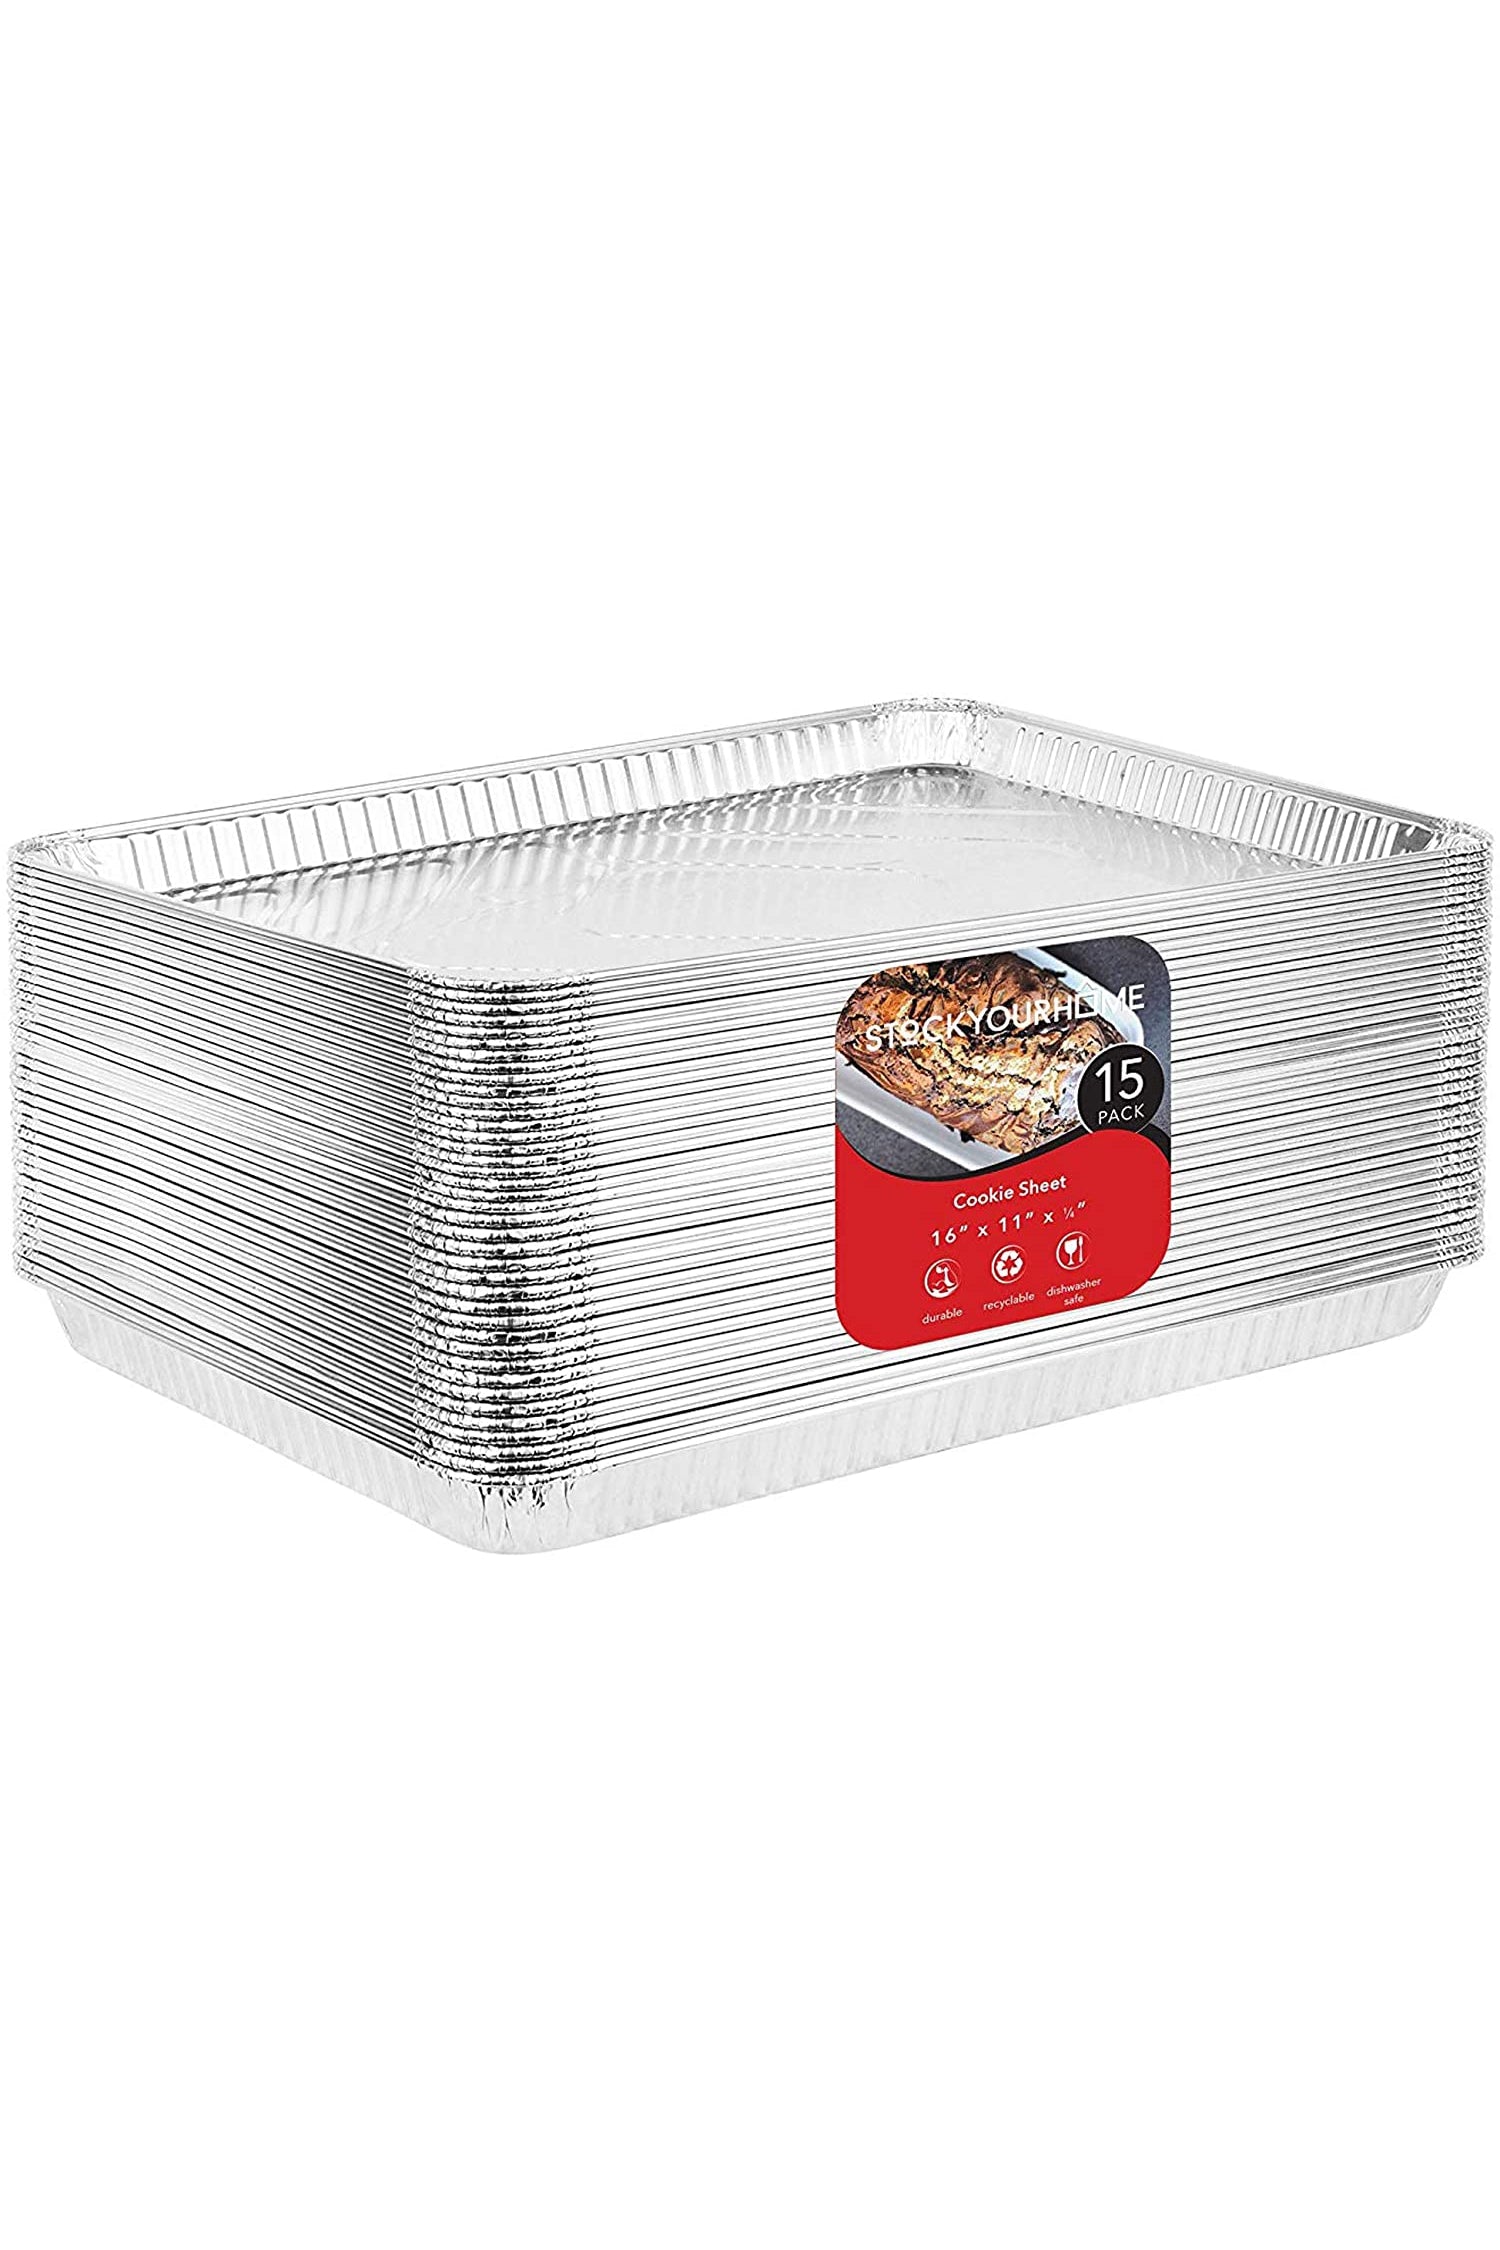 Aluminum Foil Pans30 Pack 8x8 Inches Tin Foil Pans With High Heat